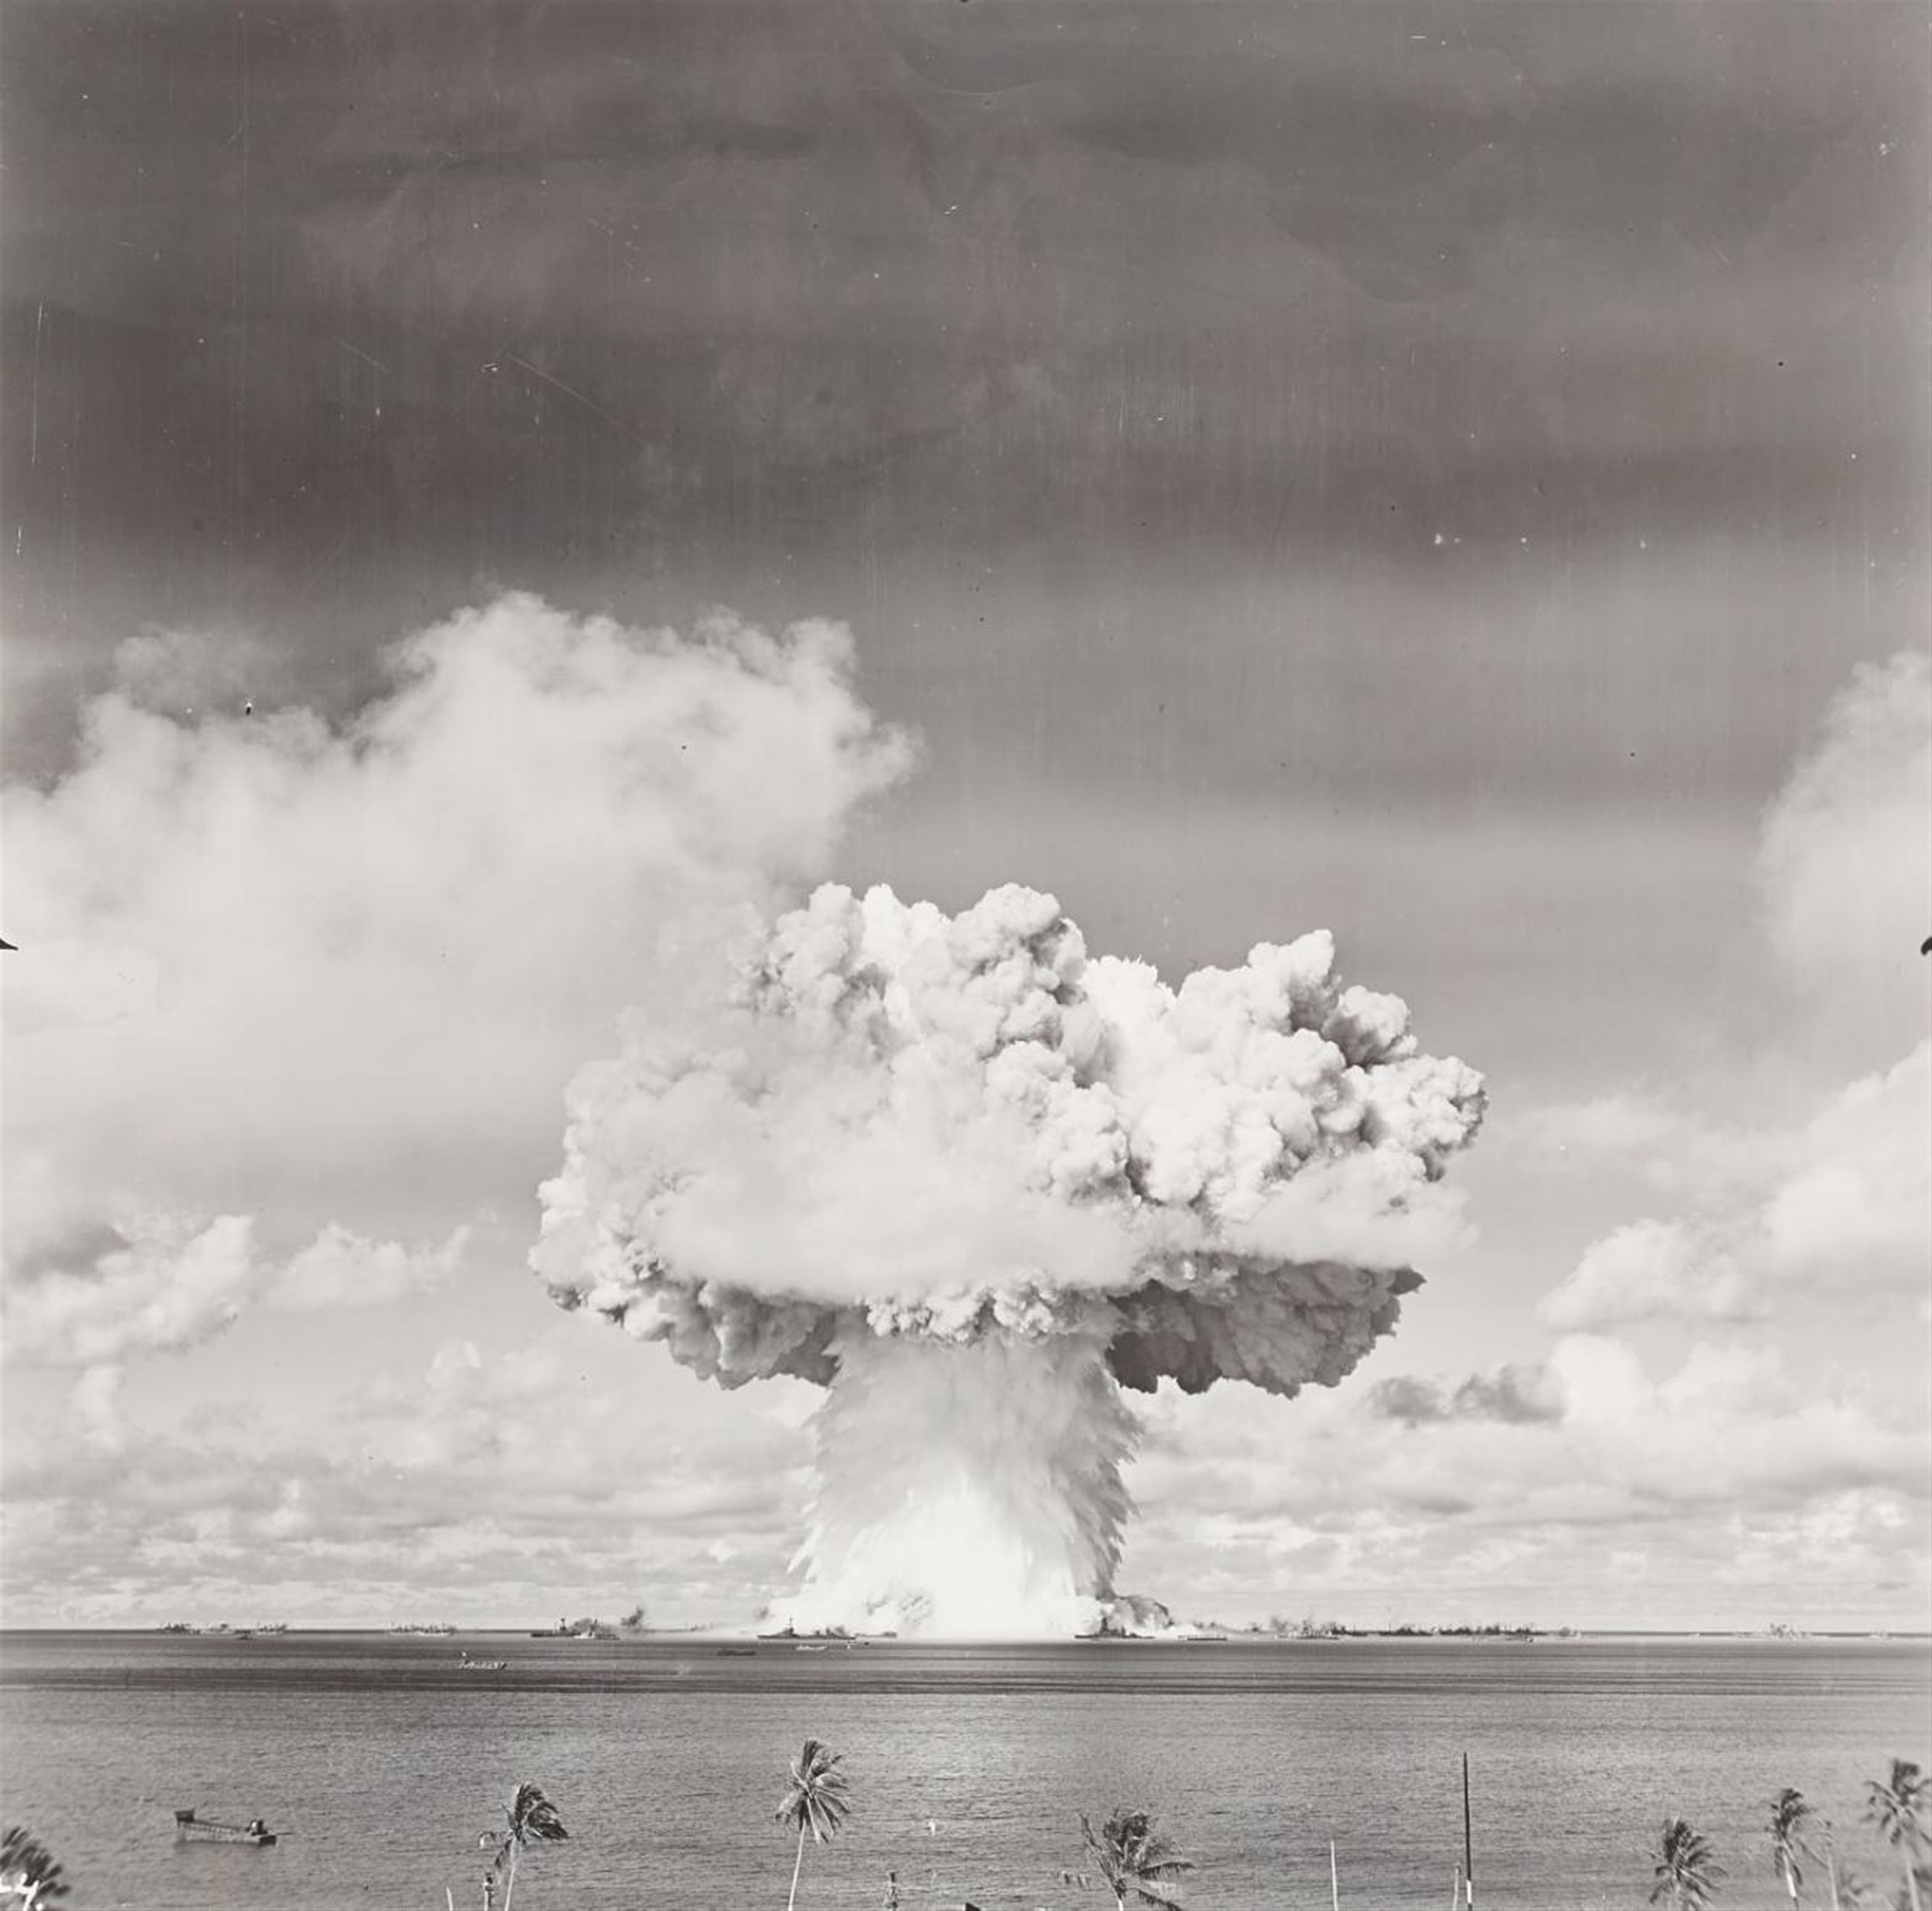 Joint Army Task Force One Photo - Untitled (Underwater Atomic Bomb, Bikini Atoll) - image-1